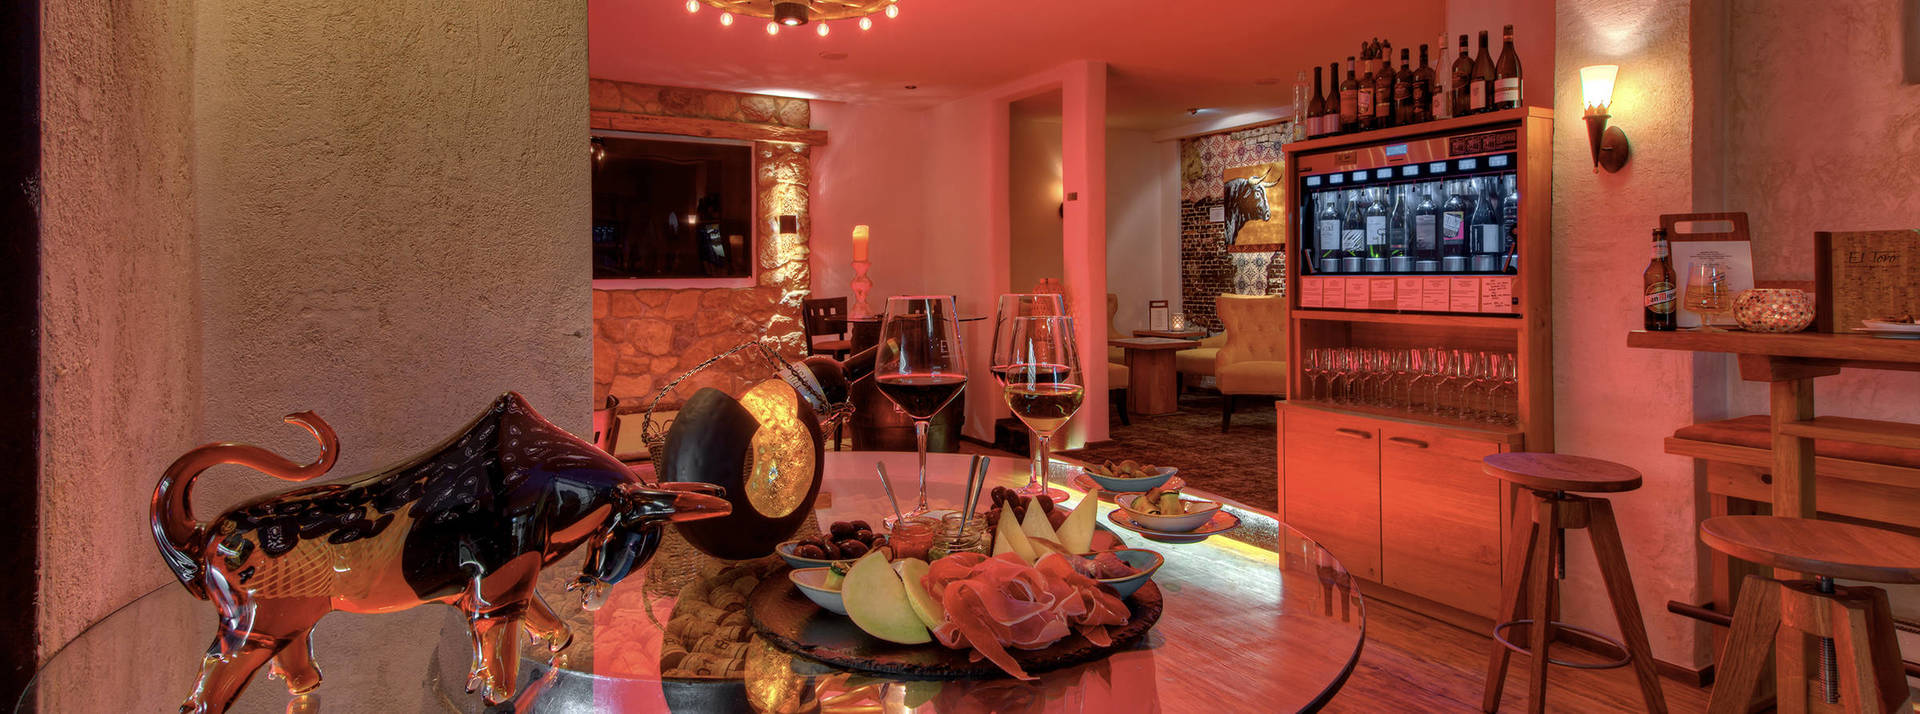 Restaurant El Toro in Oberstaufen - Königshof Hotel-Resort Oberstaufen - Offizielle Webseite